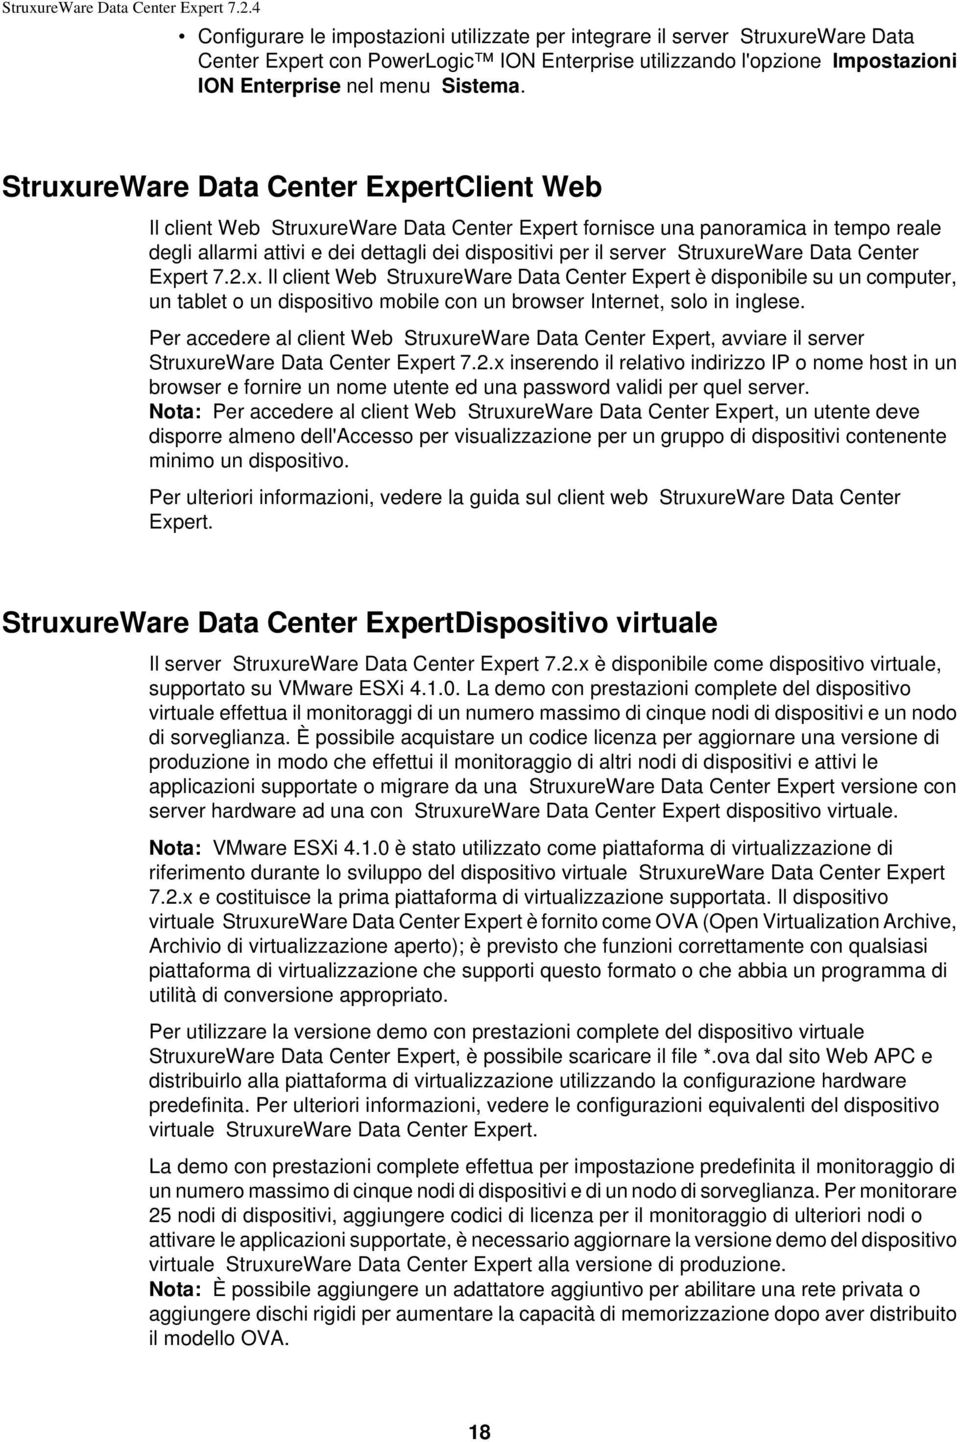 StruxureWare Data Center Expert 7.2.x. Il client Web StruxureWare Data Center Expert è disponibile su un computer, un tablet o un dispositivo mobile con un browser Internet, solo in inglese.